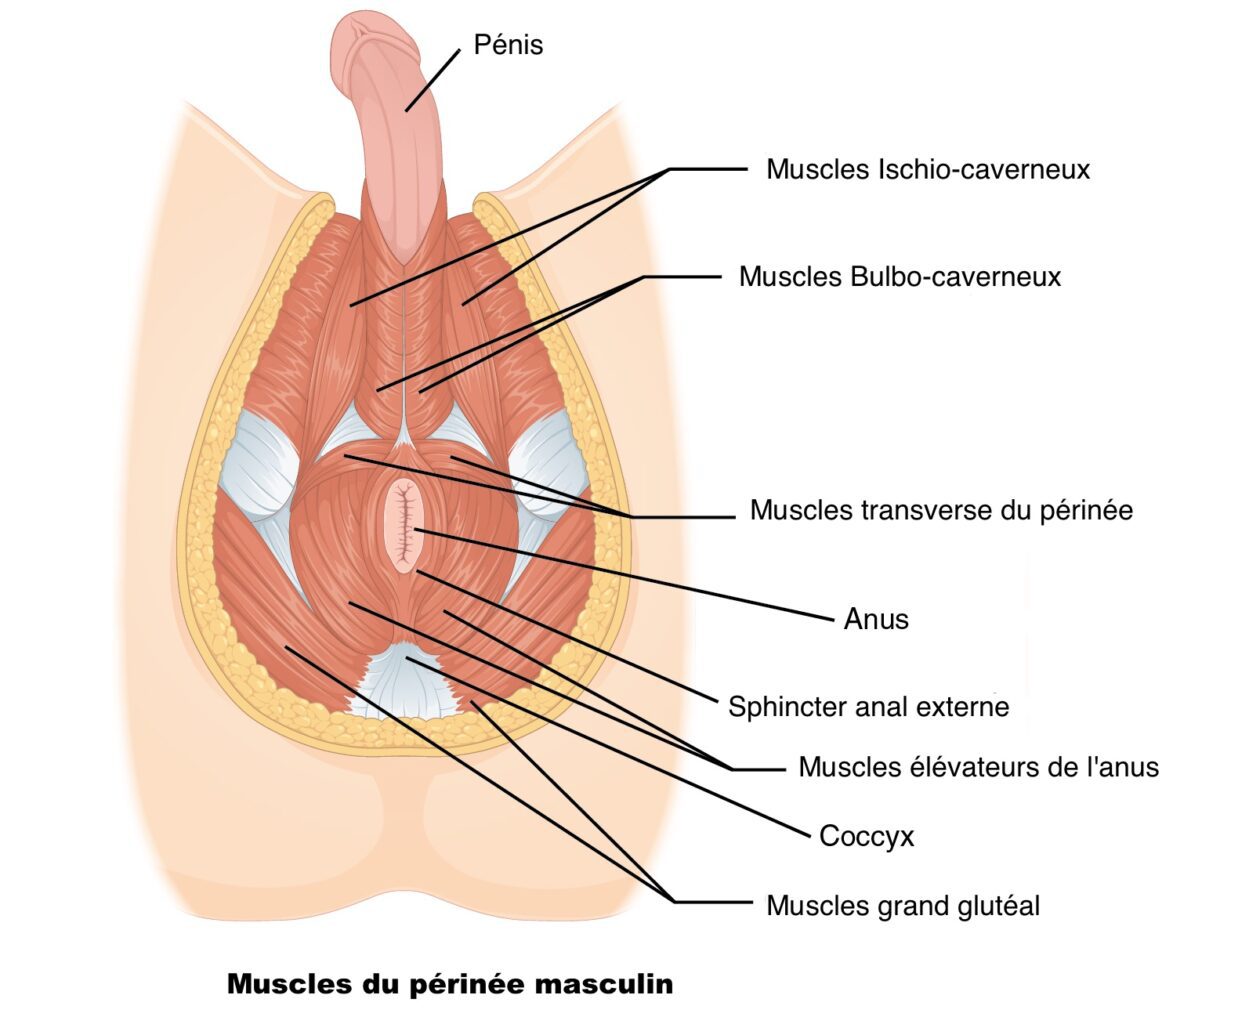 Muscles du périnée masculin